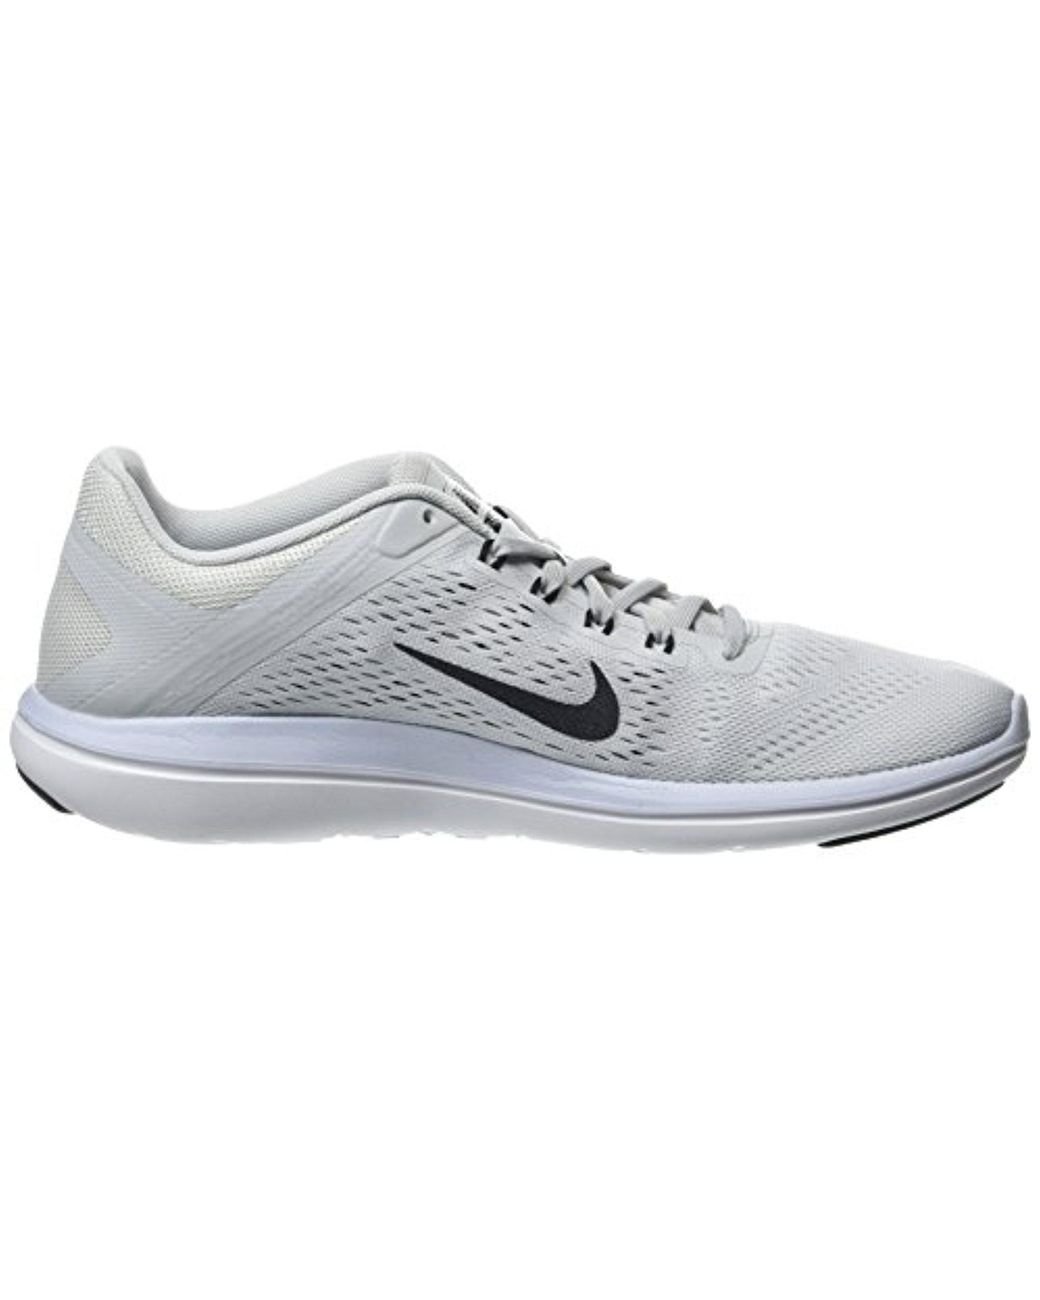 Nike Flex 2016 Rn Running Shoes in White | Lyst